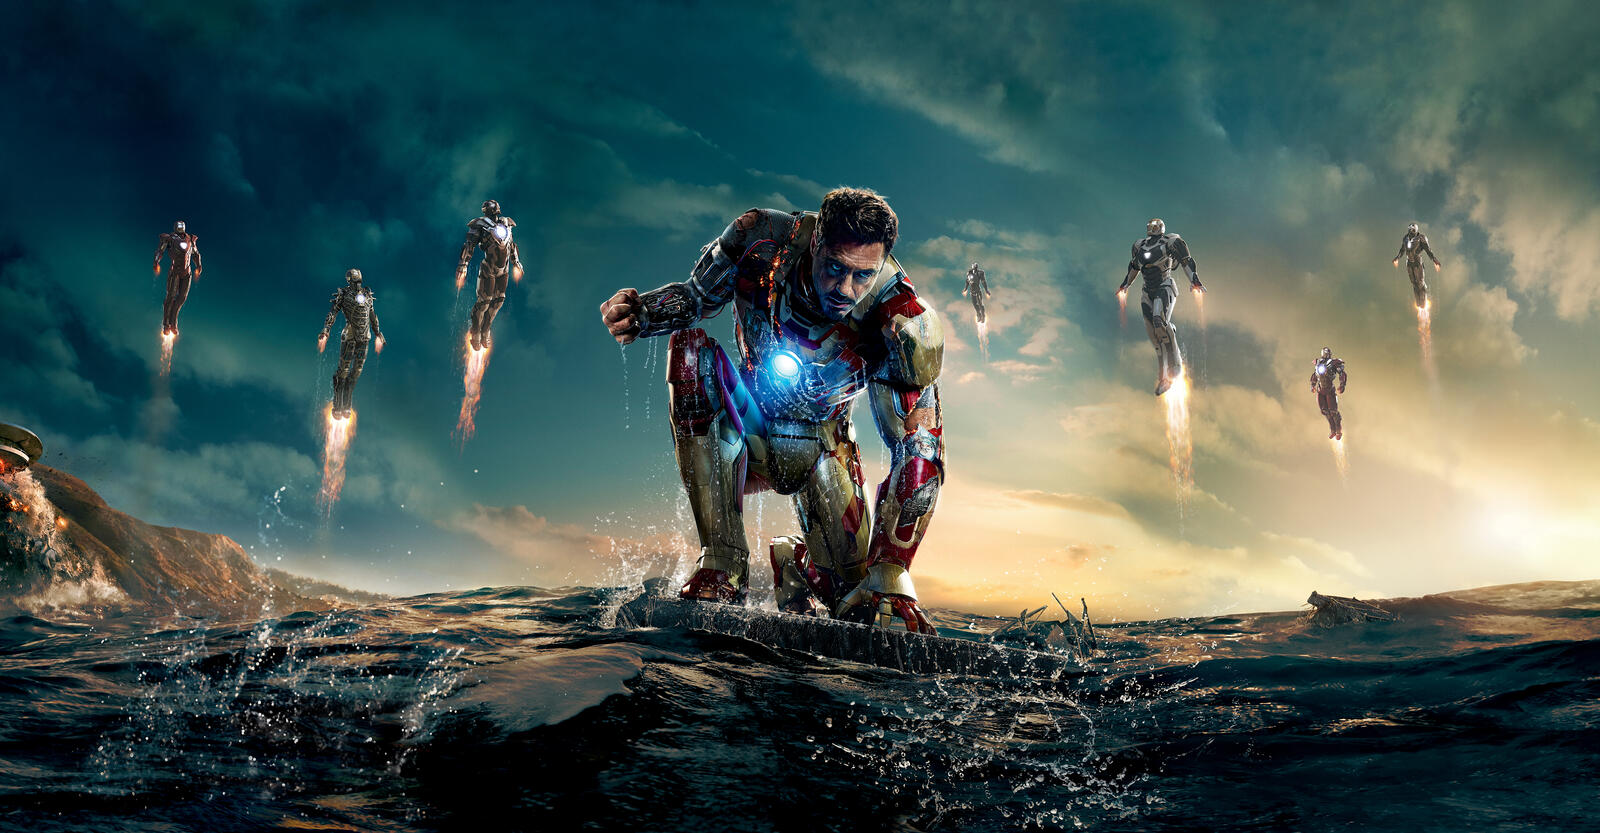 Wallpapers Iron man 3 2013 movie fantasy on the desktop